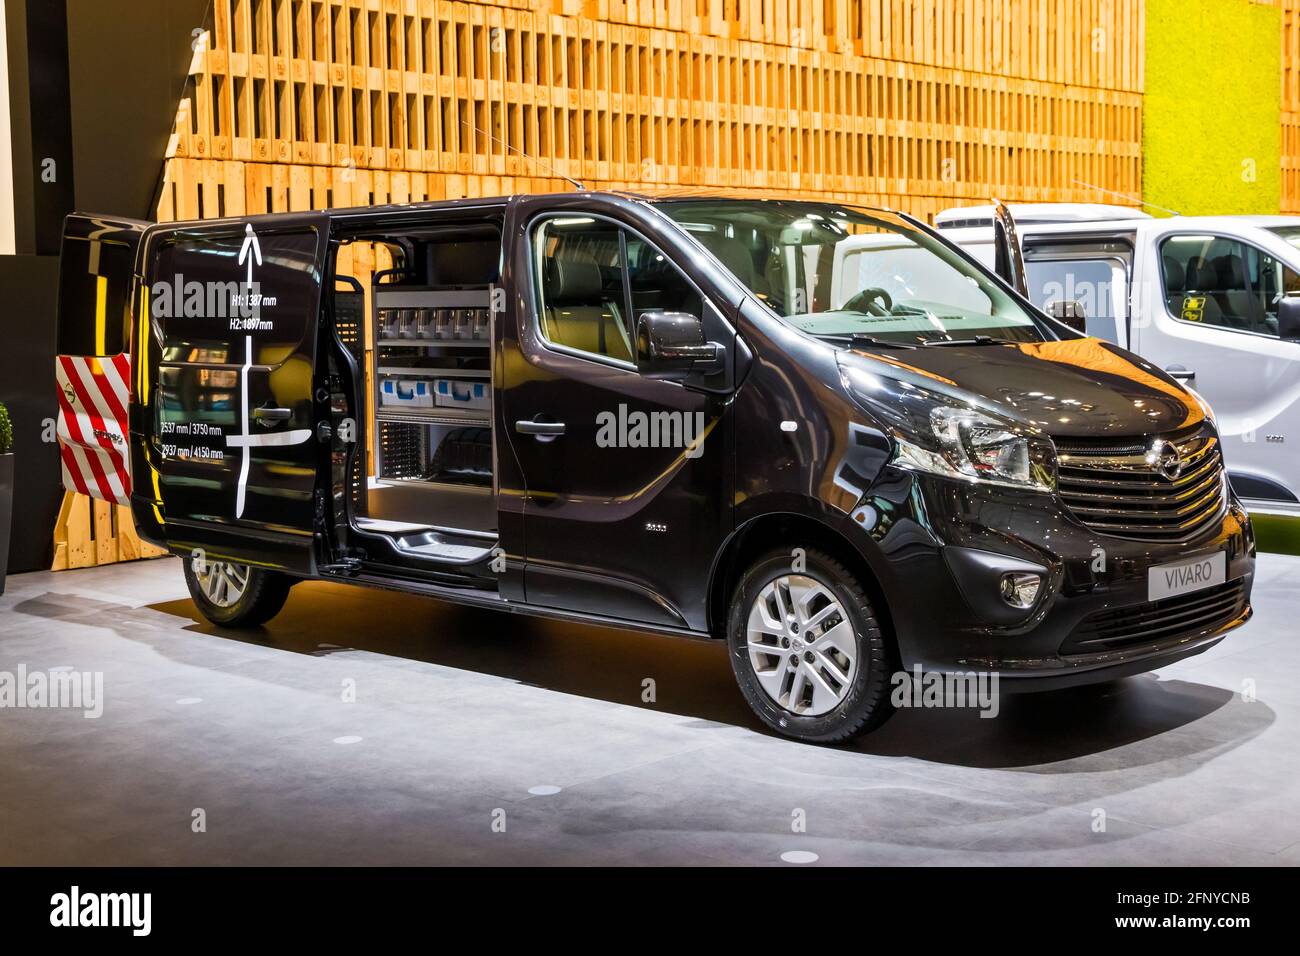 Opel Vivaro commercial van showcased at the Brussels Expo Autosalon motor  show. Belgium - January 19, 2017 Stock Photo - Alamy